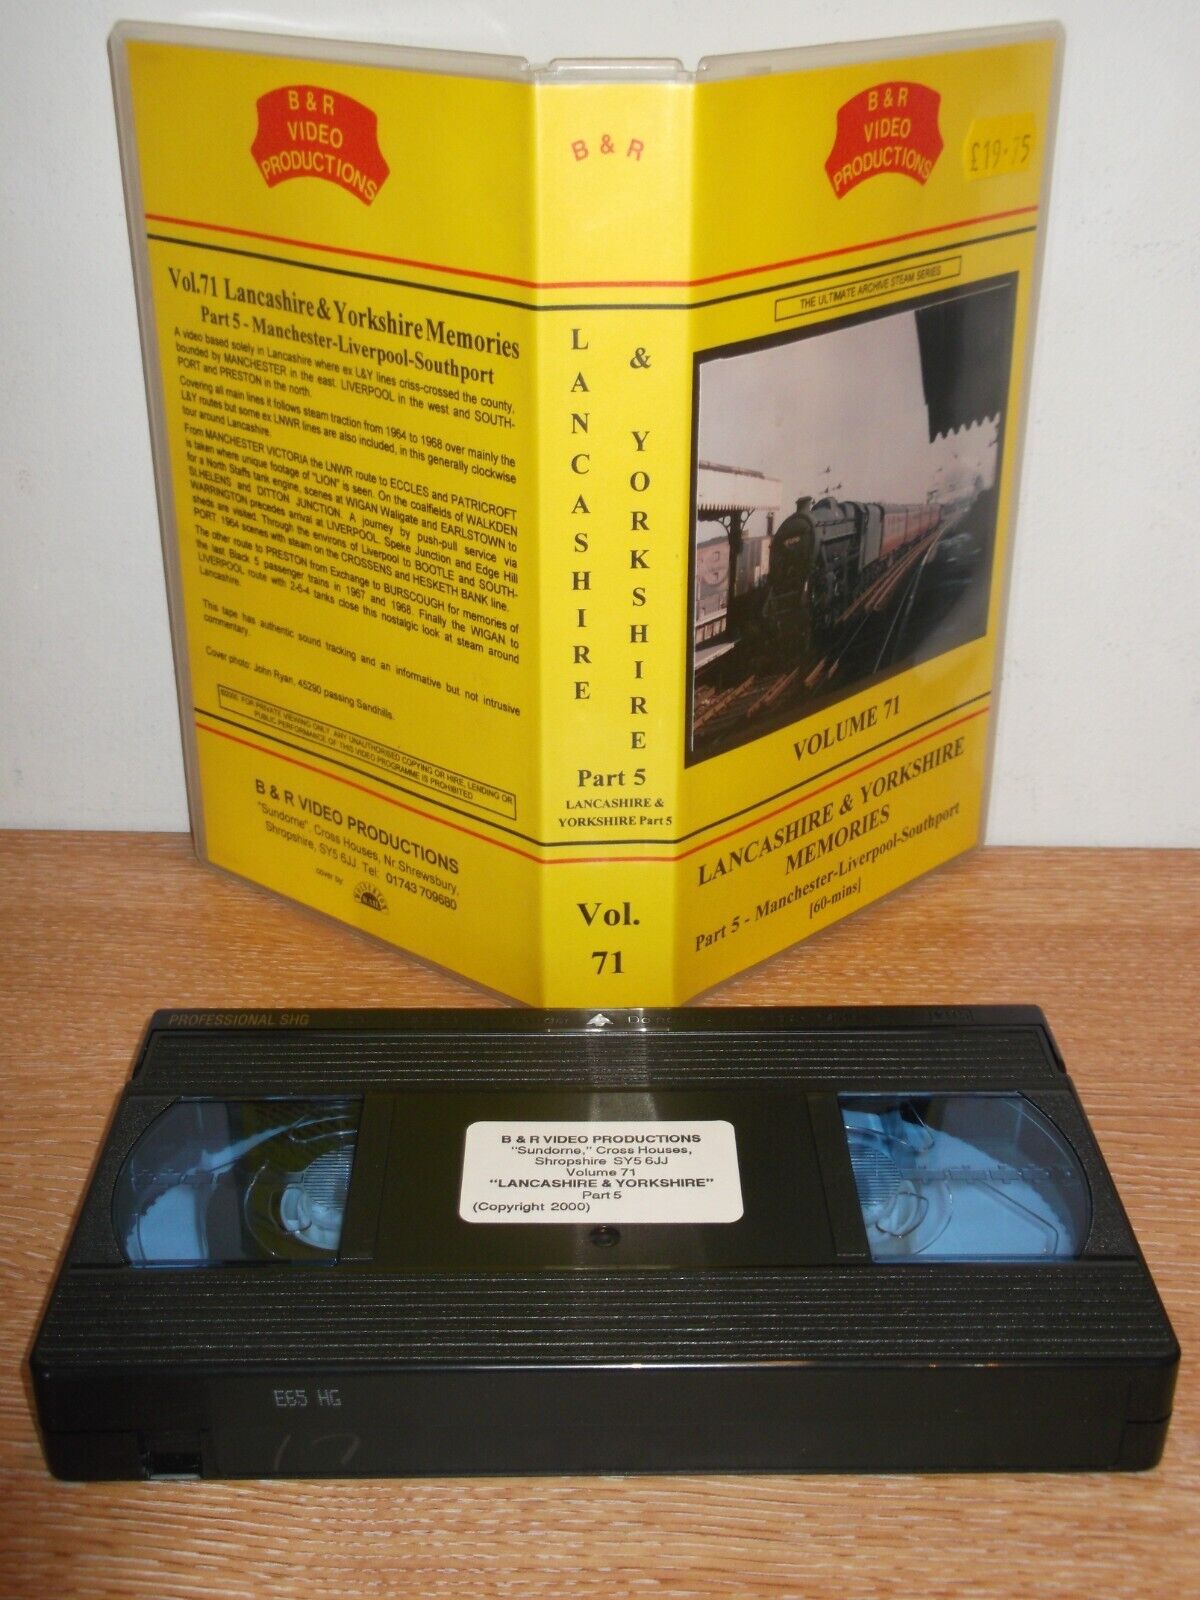 STEAM SERIES - B&R RAILWAYS, LANCASHIRE YORKSHIRE MEMORIES, VOL 71 - VHS VIDEO